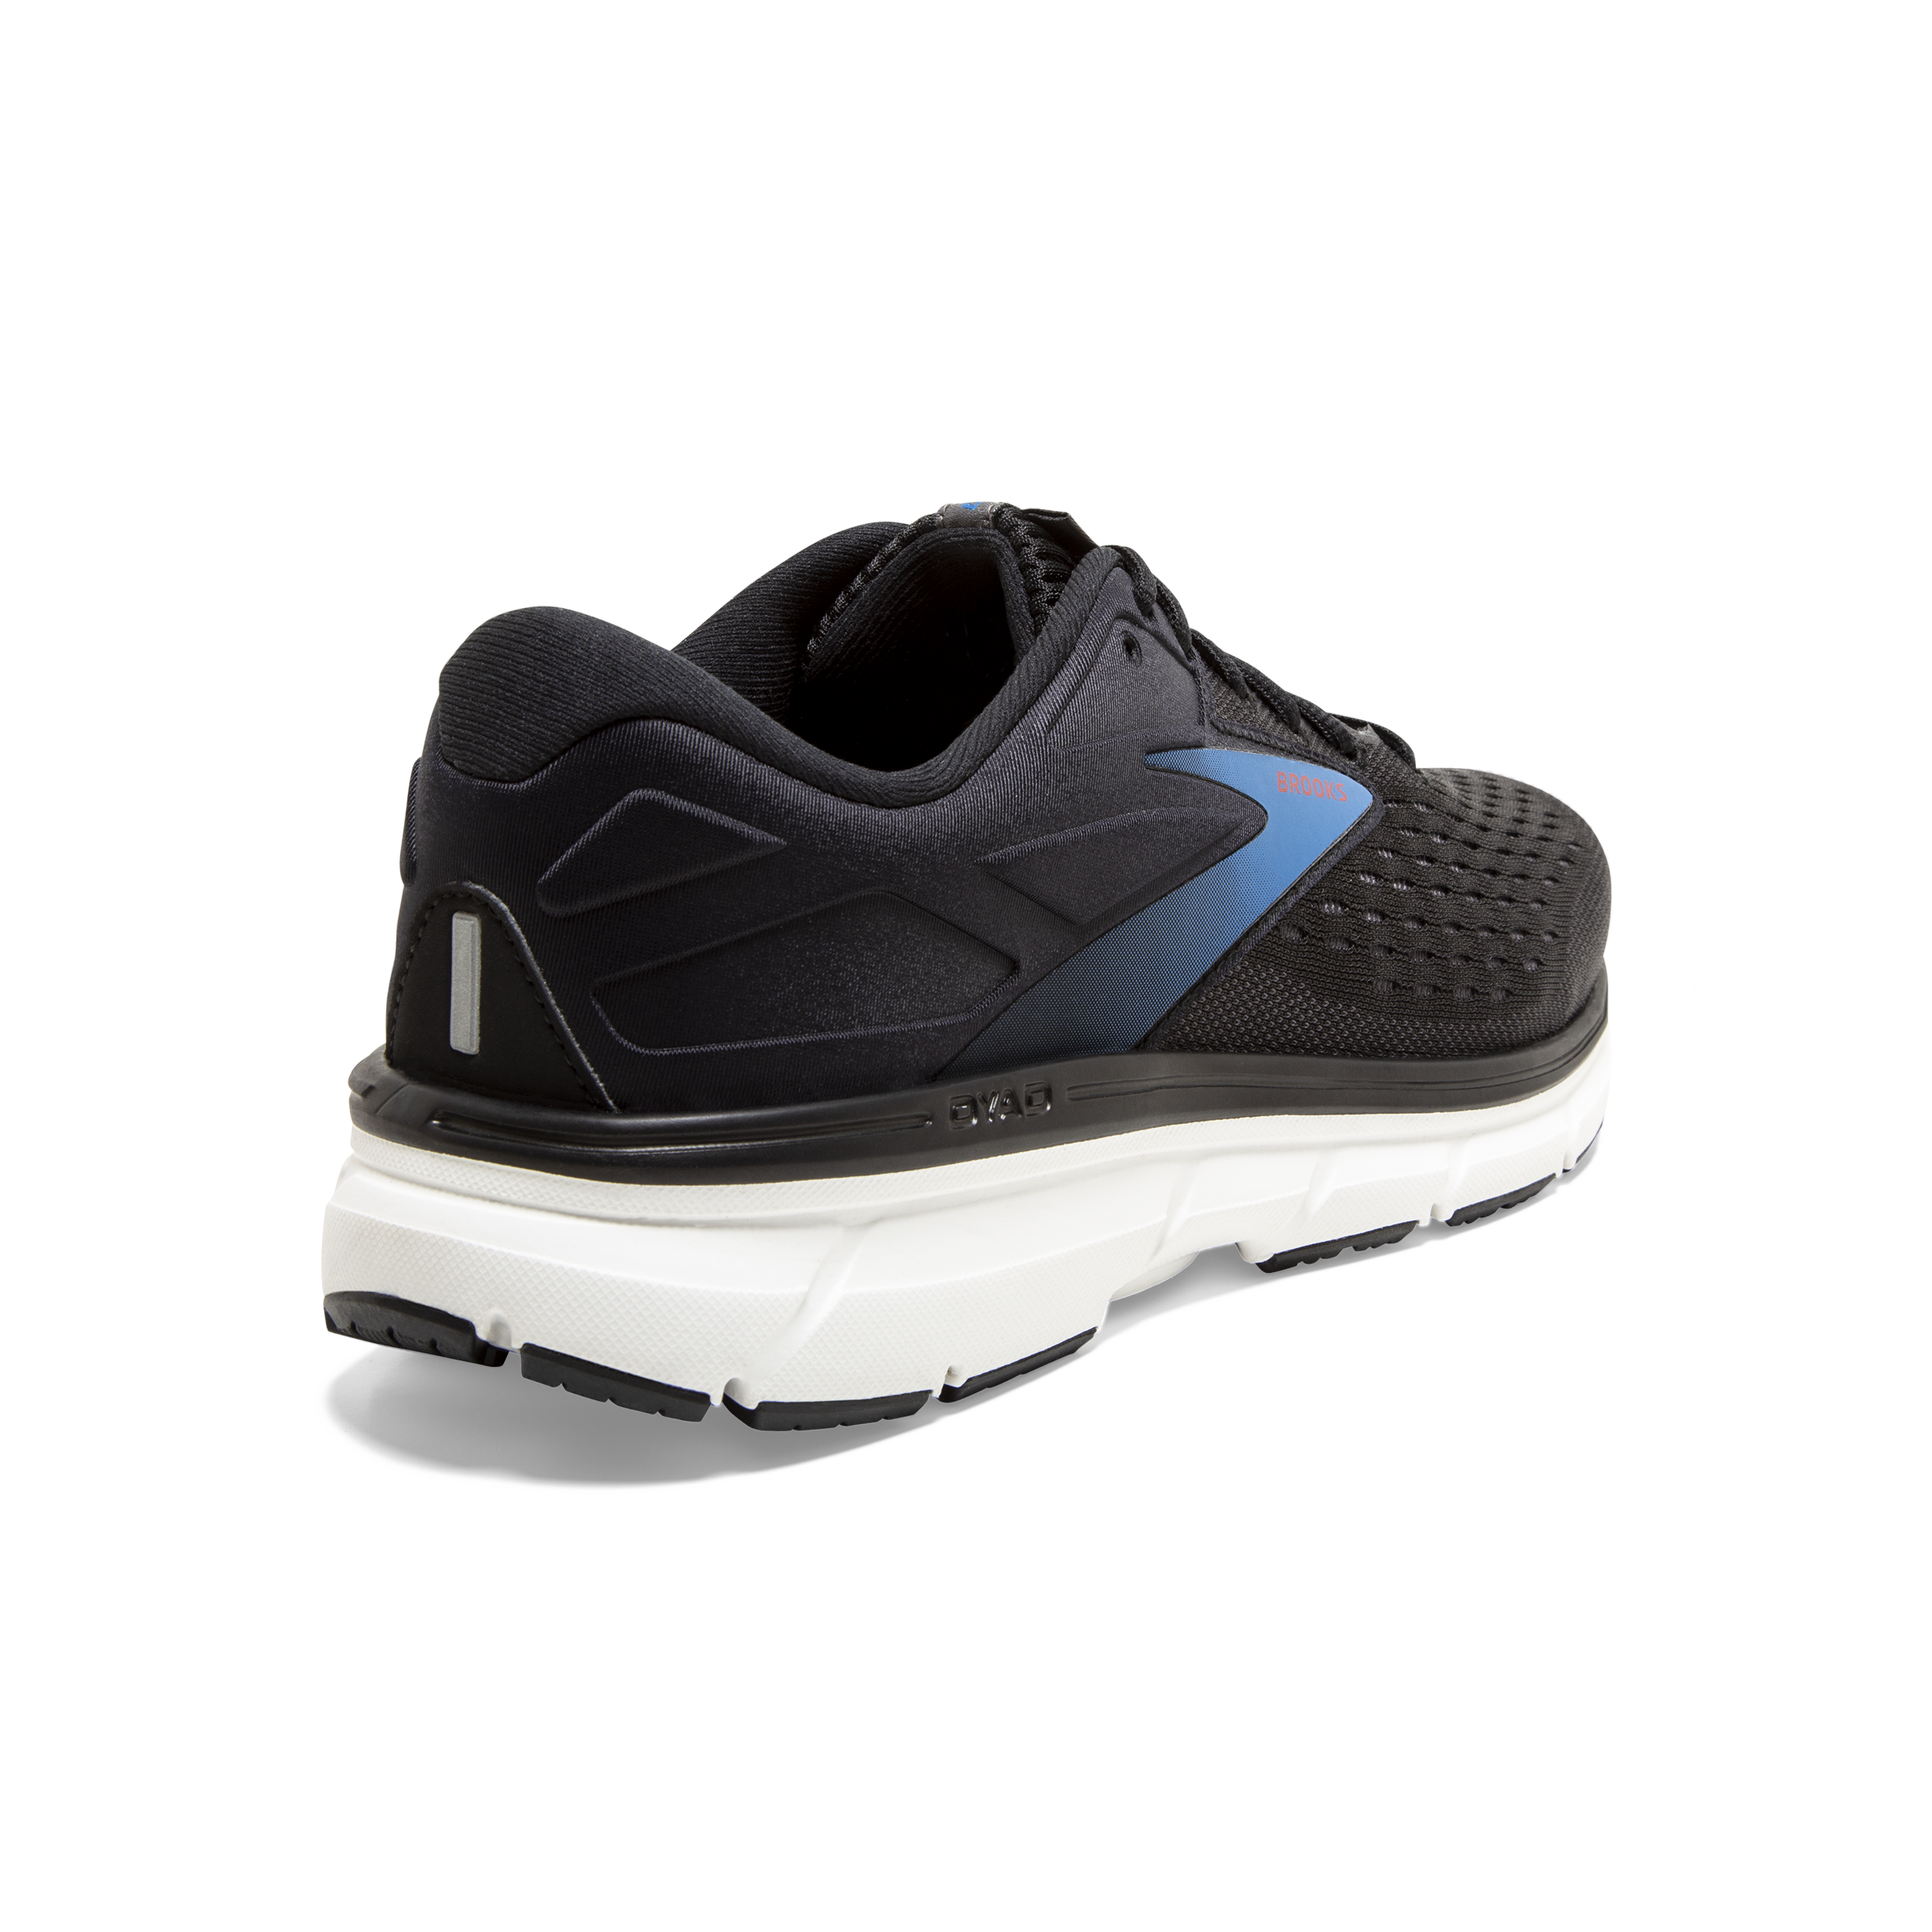 Asphalt/Electric Blue/Black NIB Brooks Men's Dyad 9 Running Shoes 11 2E W US 